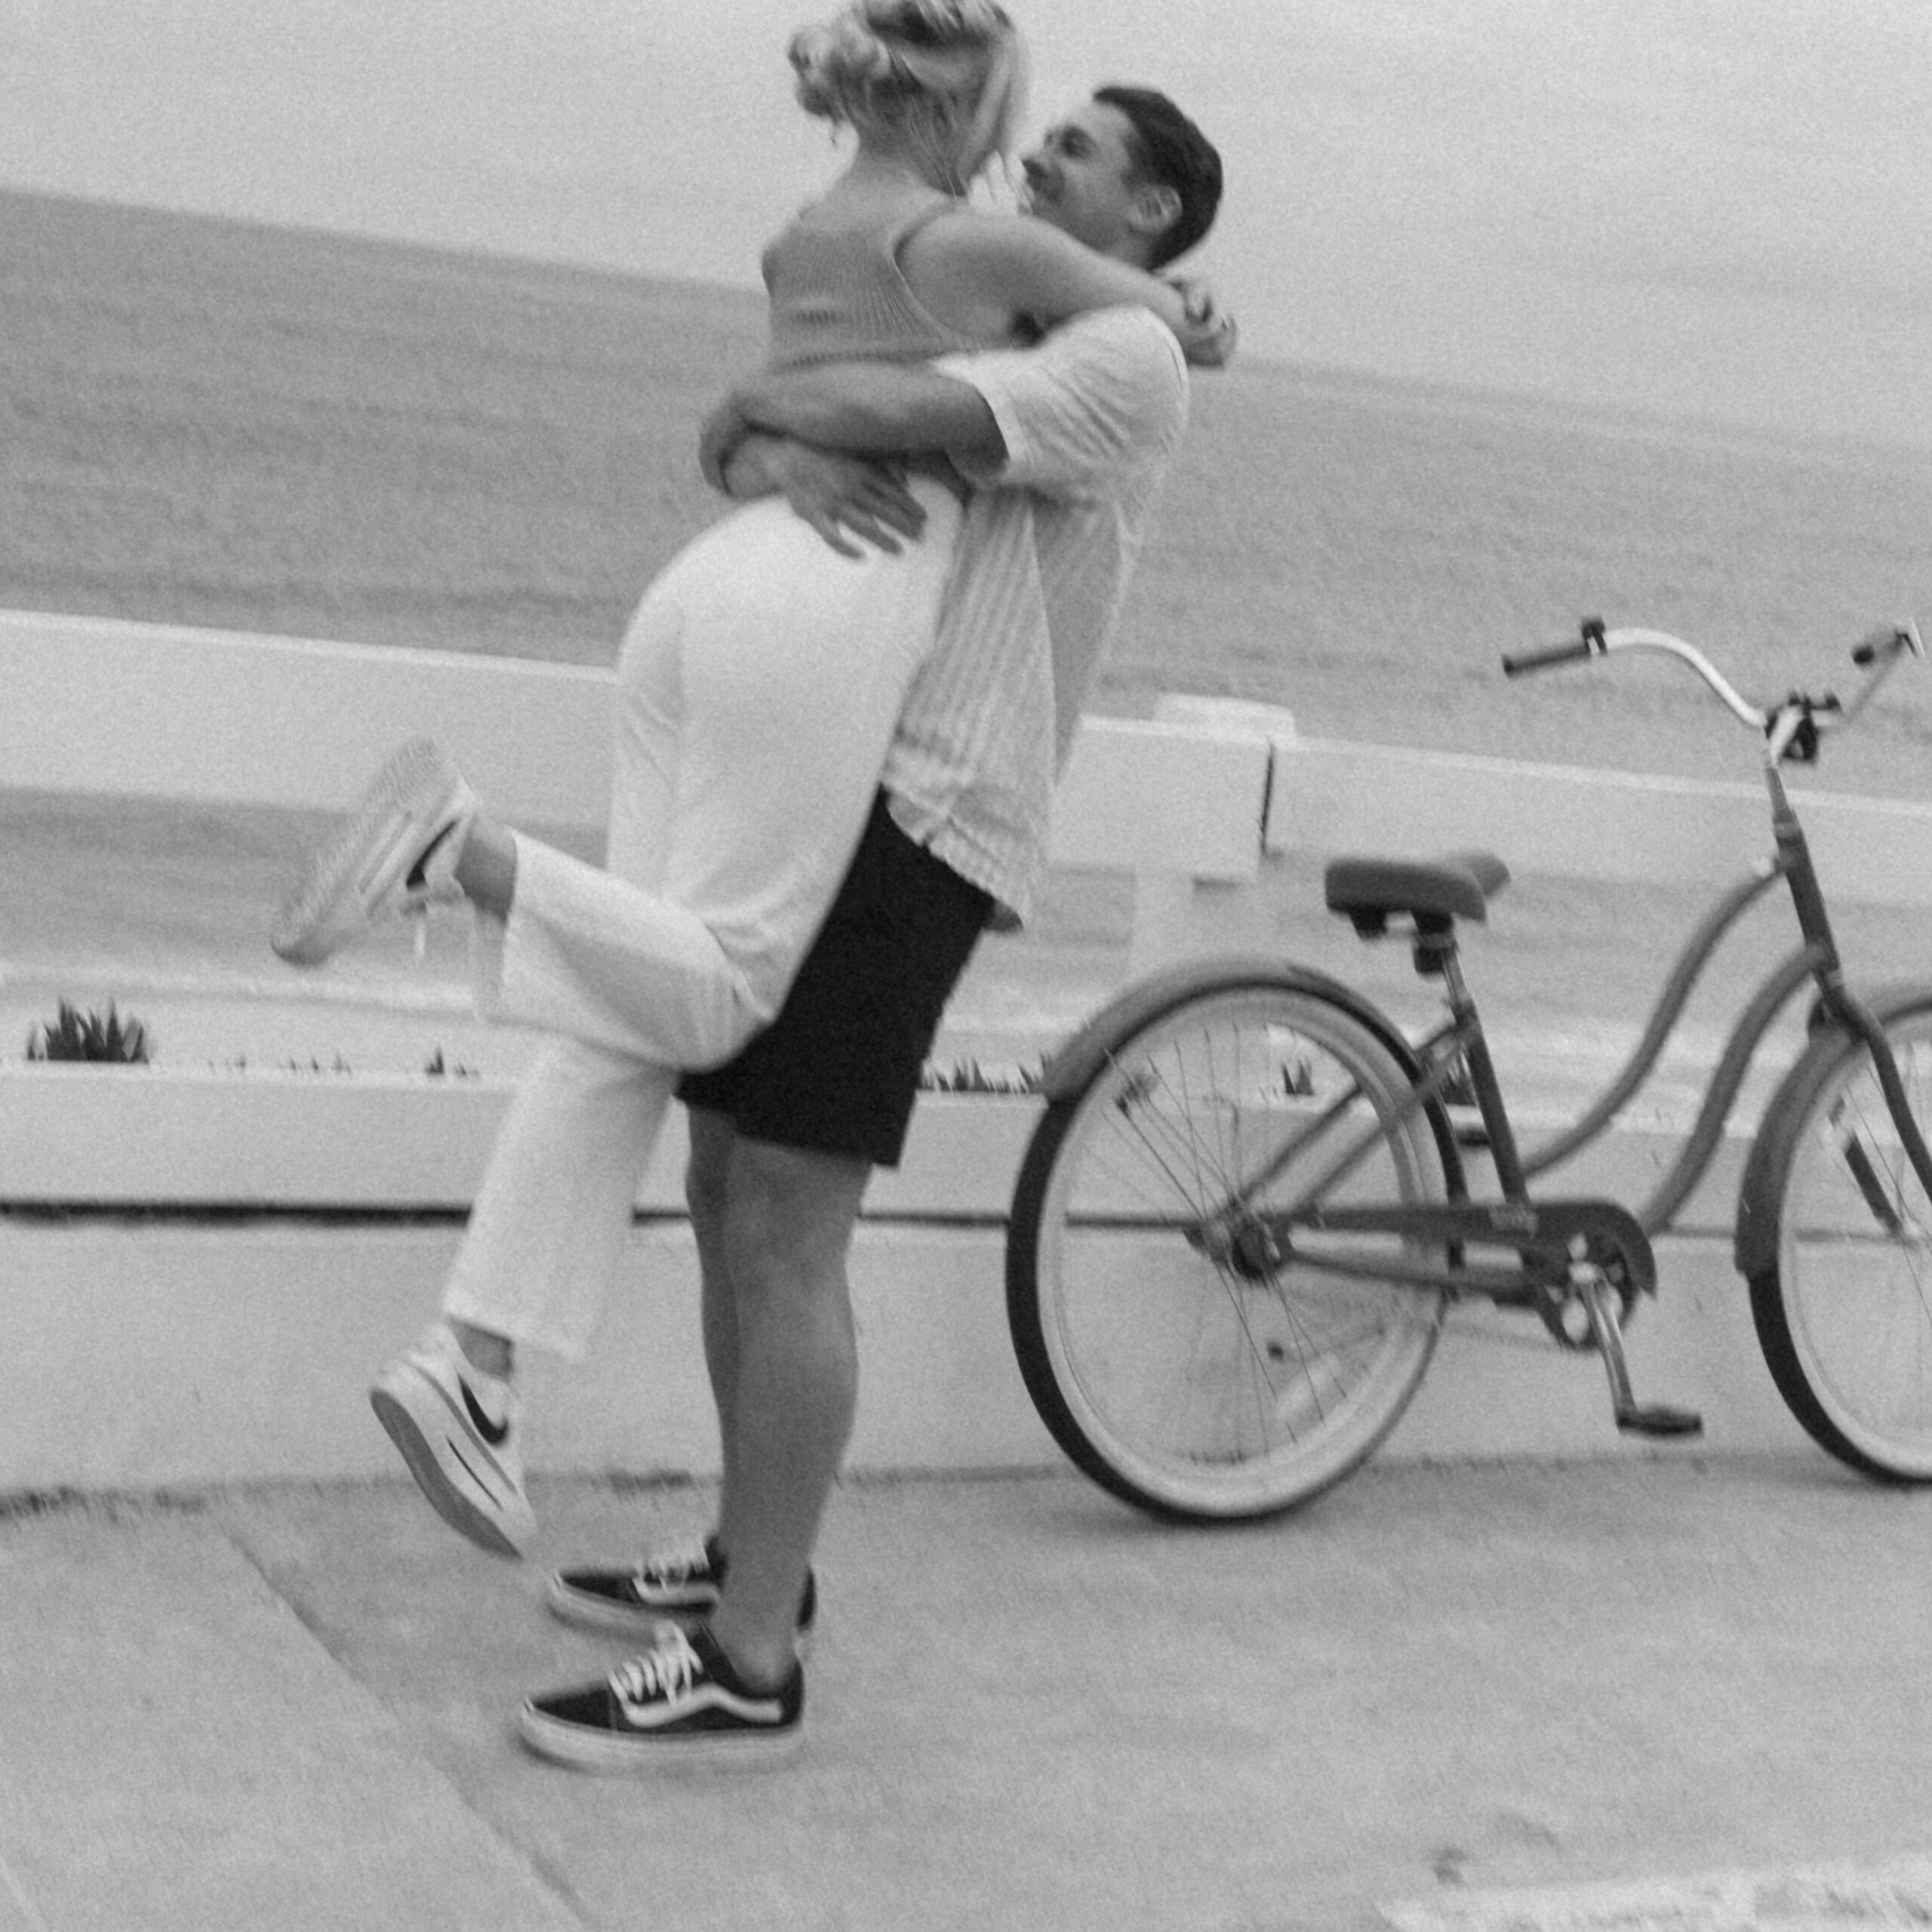 Fun Engagement Photos with bike in San Diego, California